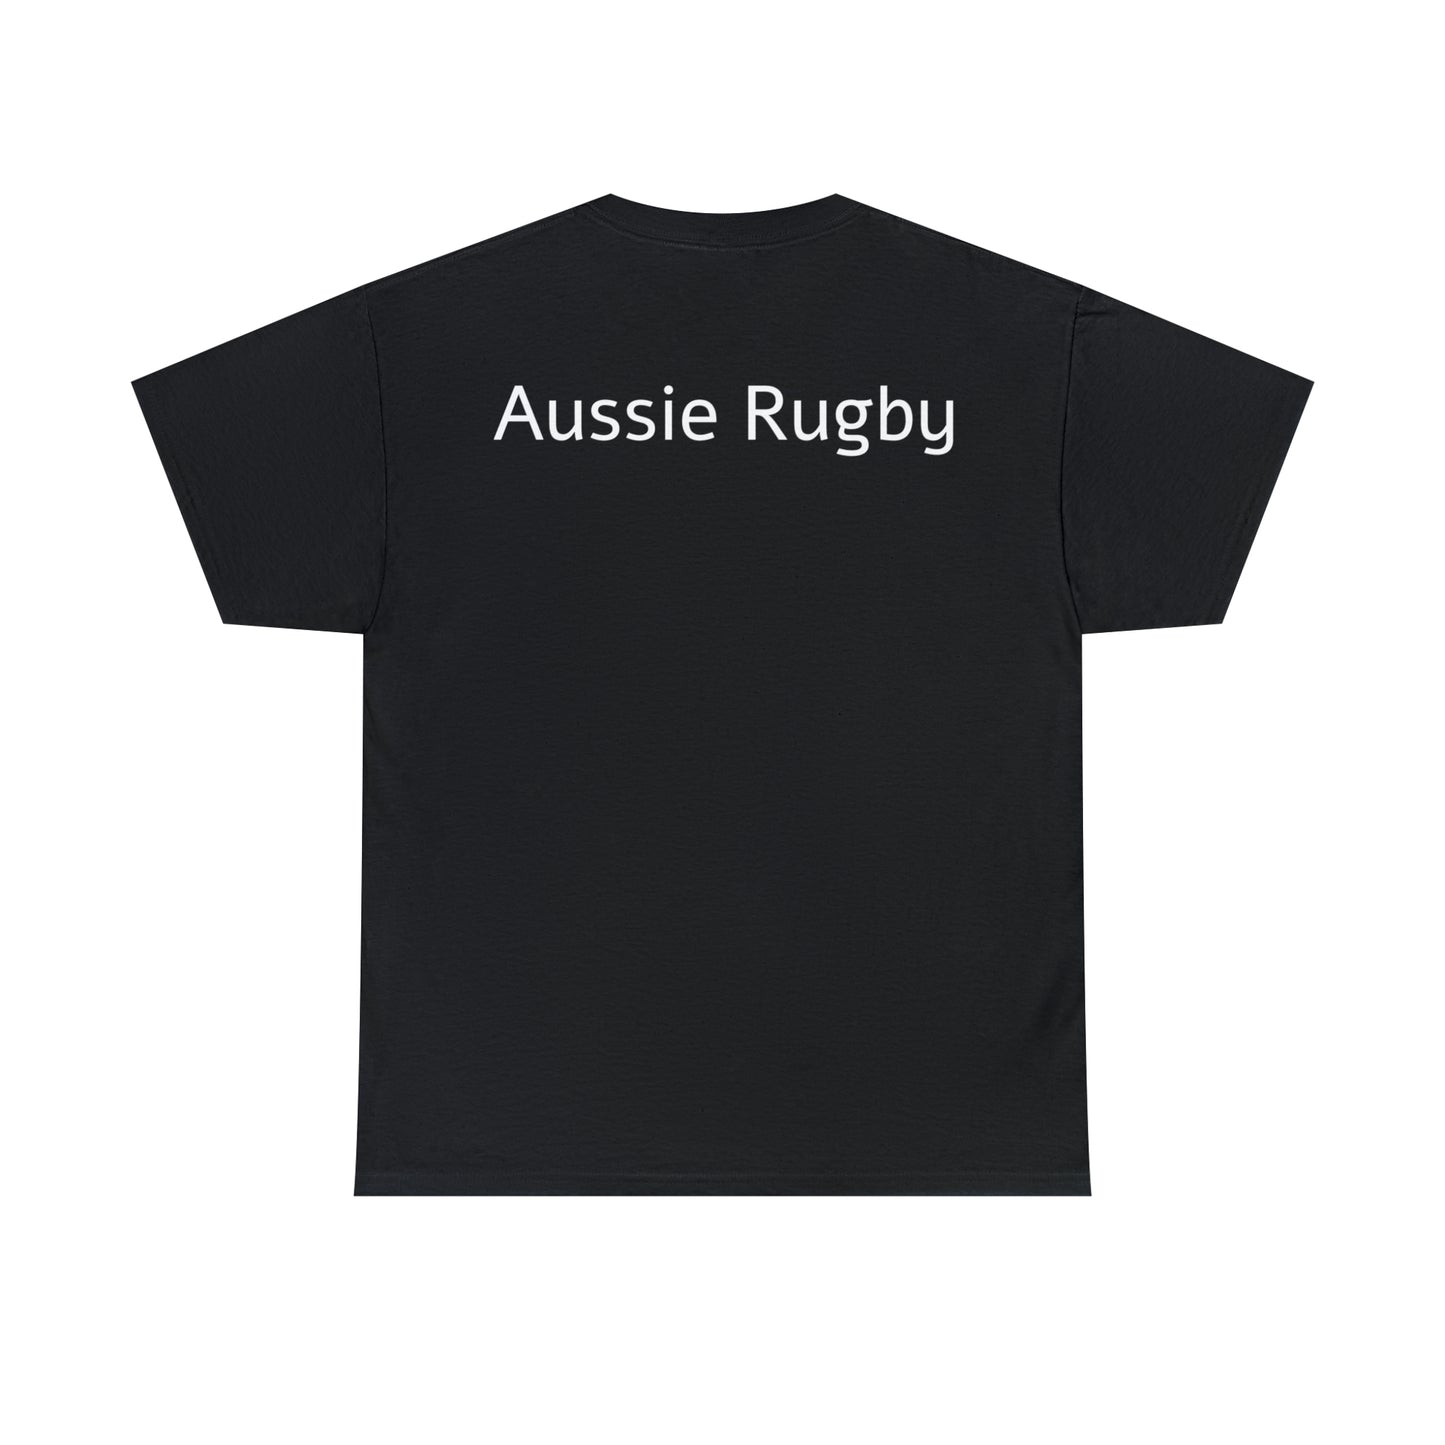 Australia celebrating with RWC - black shirt